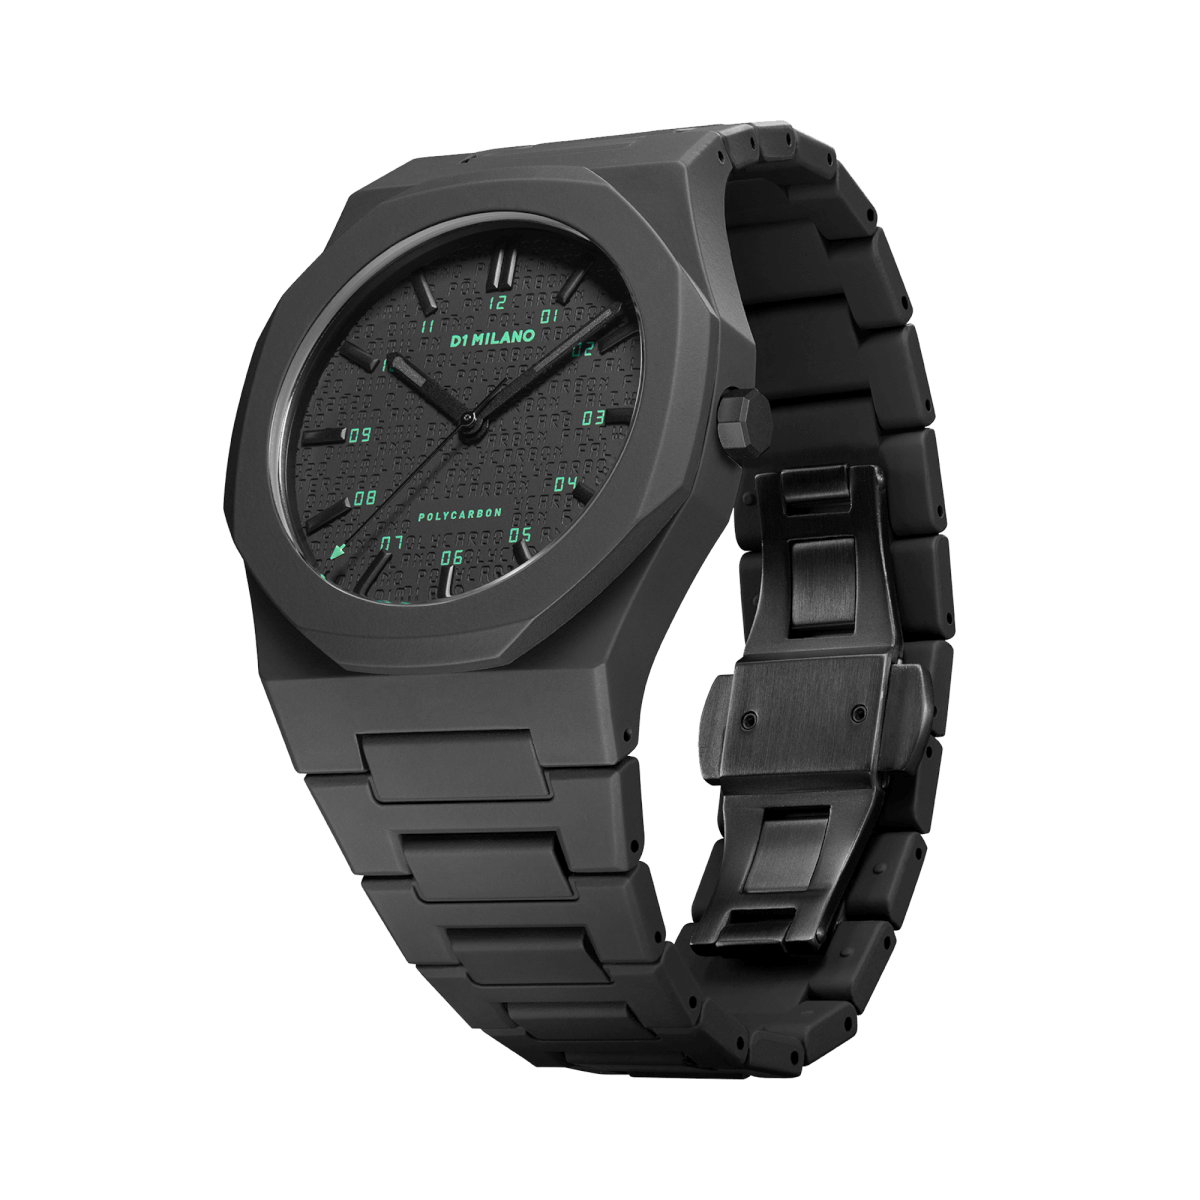 D1 Milanoより コンピュータープログラミング文字列からインスパイアされた画期的な最新デザインが登場 H M S Watchstore Hms Watch Store